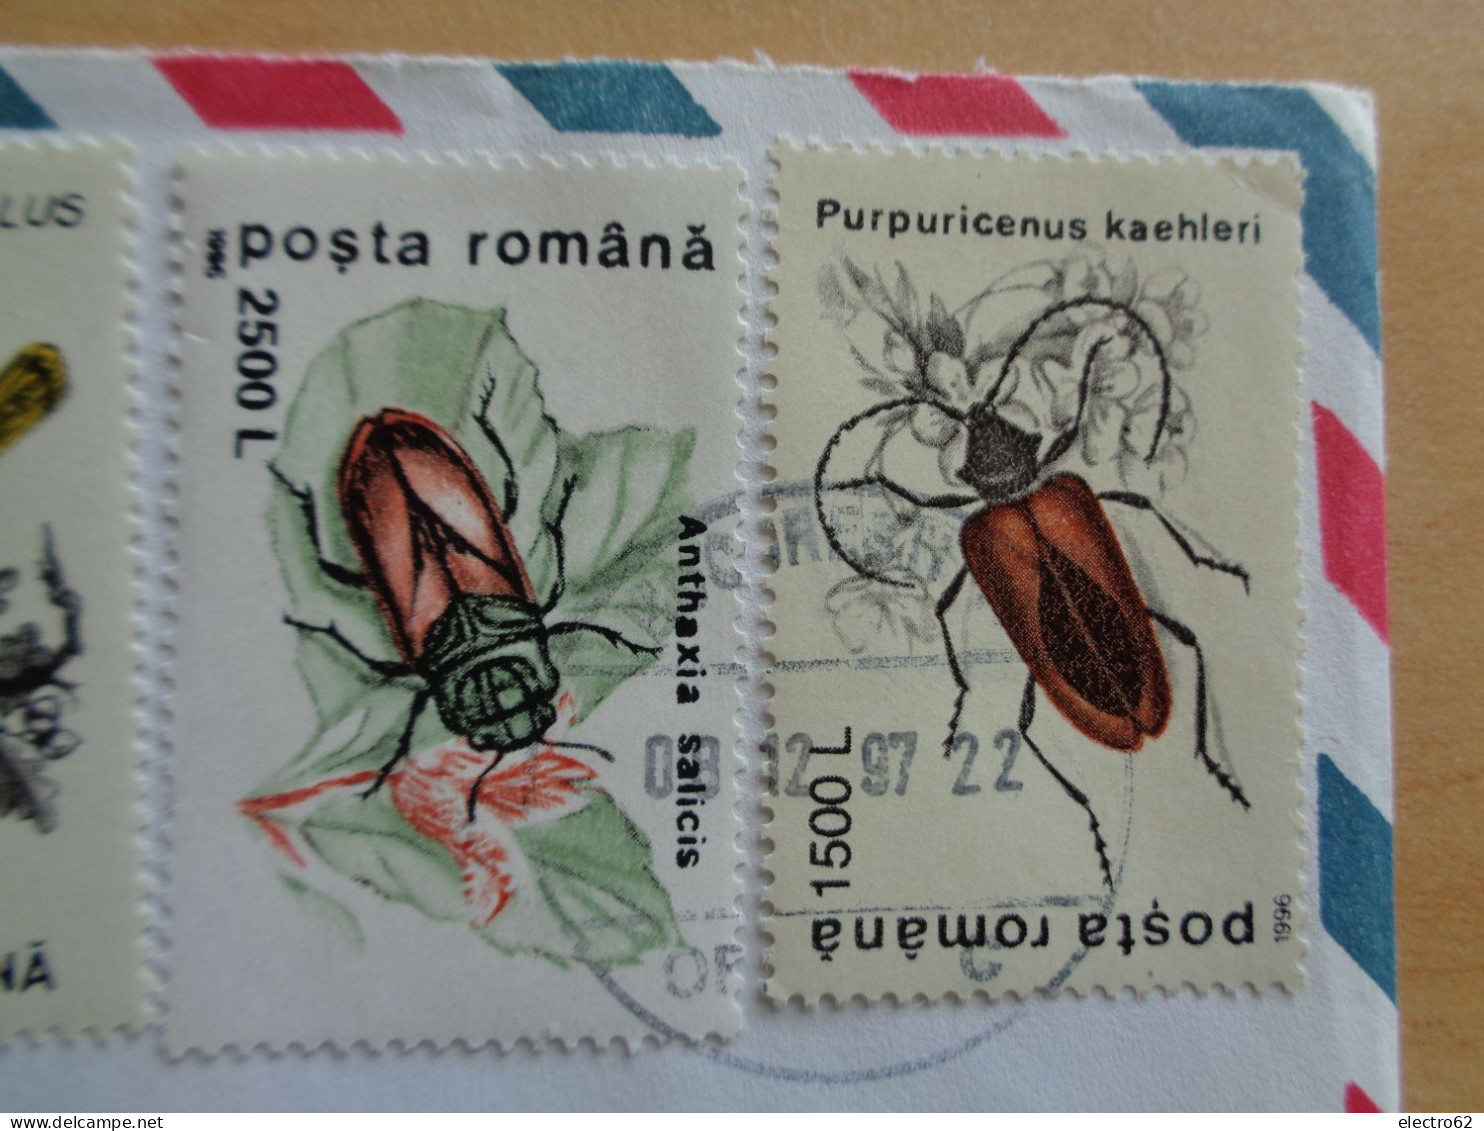 Roumanie Romana Romãnia Bucarest oiseau pasãre insecte bird vogel pájaro insecto insekt insect insectã